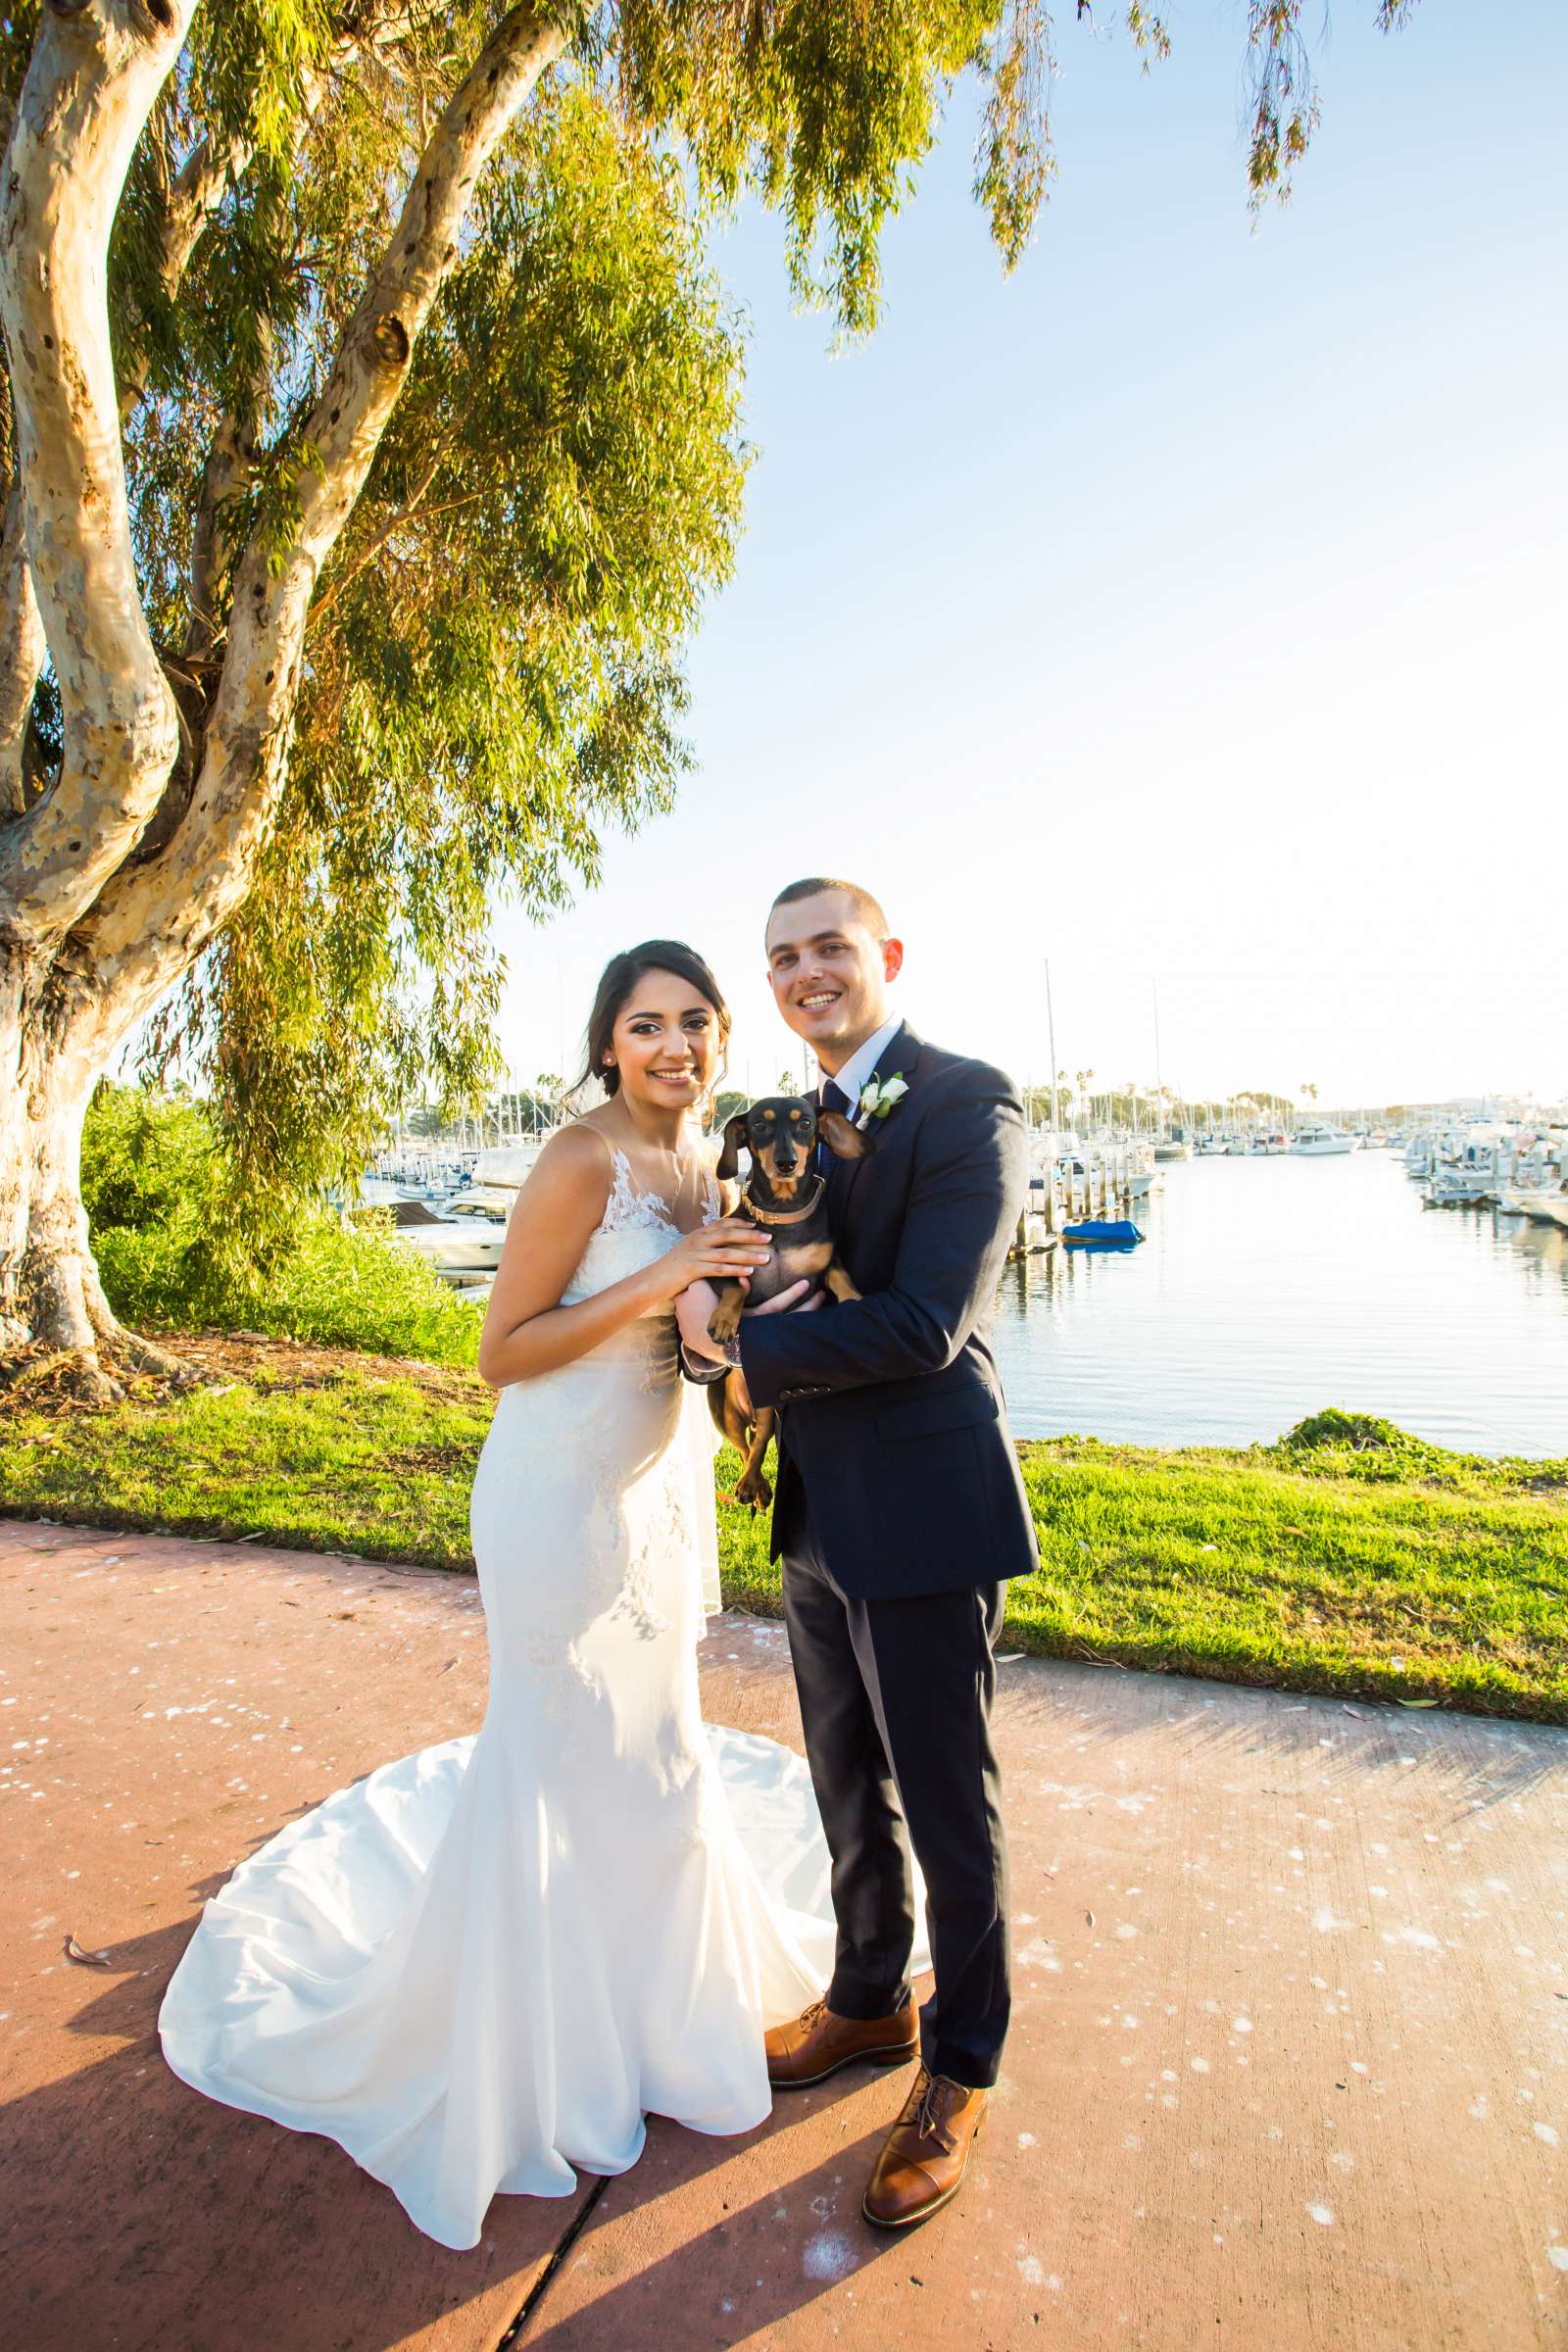 The Ultimate Skybox Wedding, Prescilla and David Wedding Photo #5 by True Photography